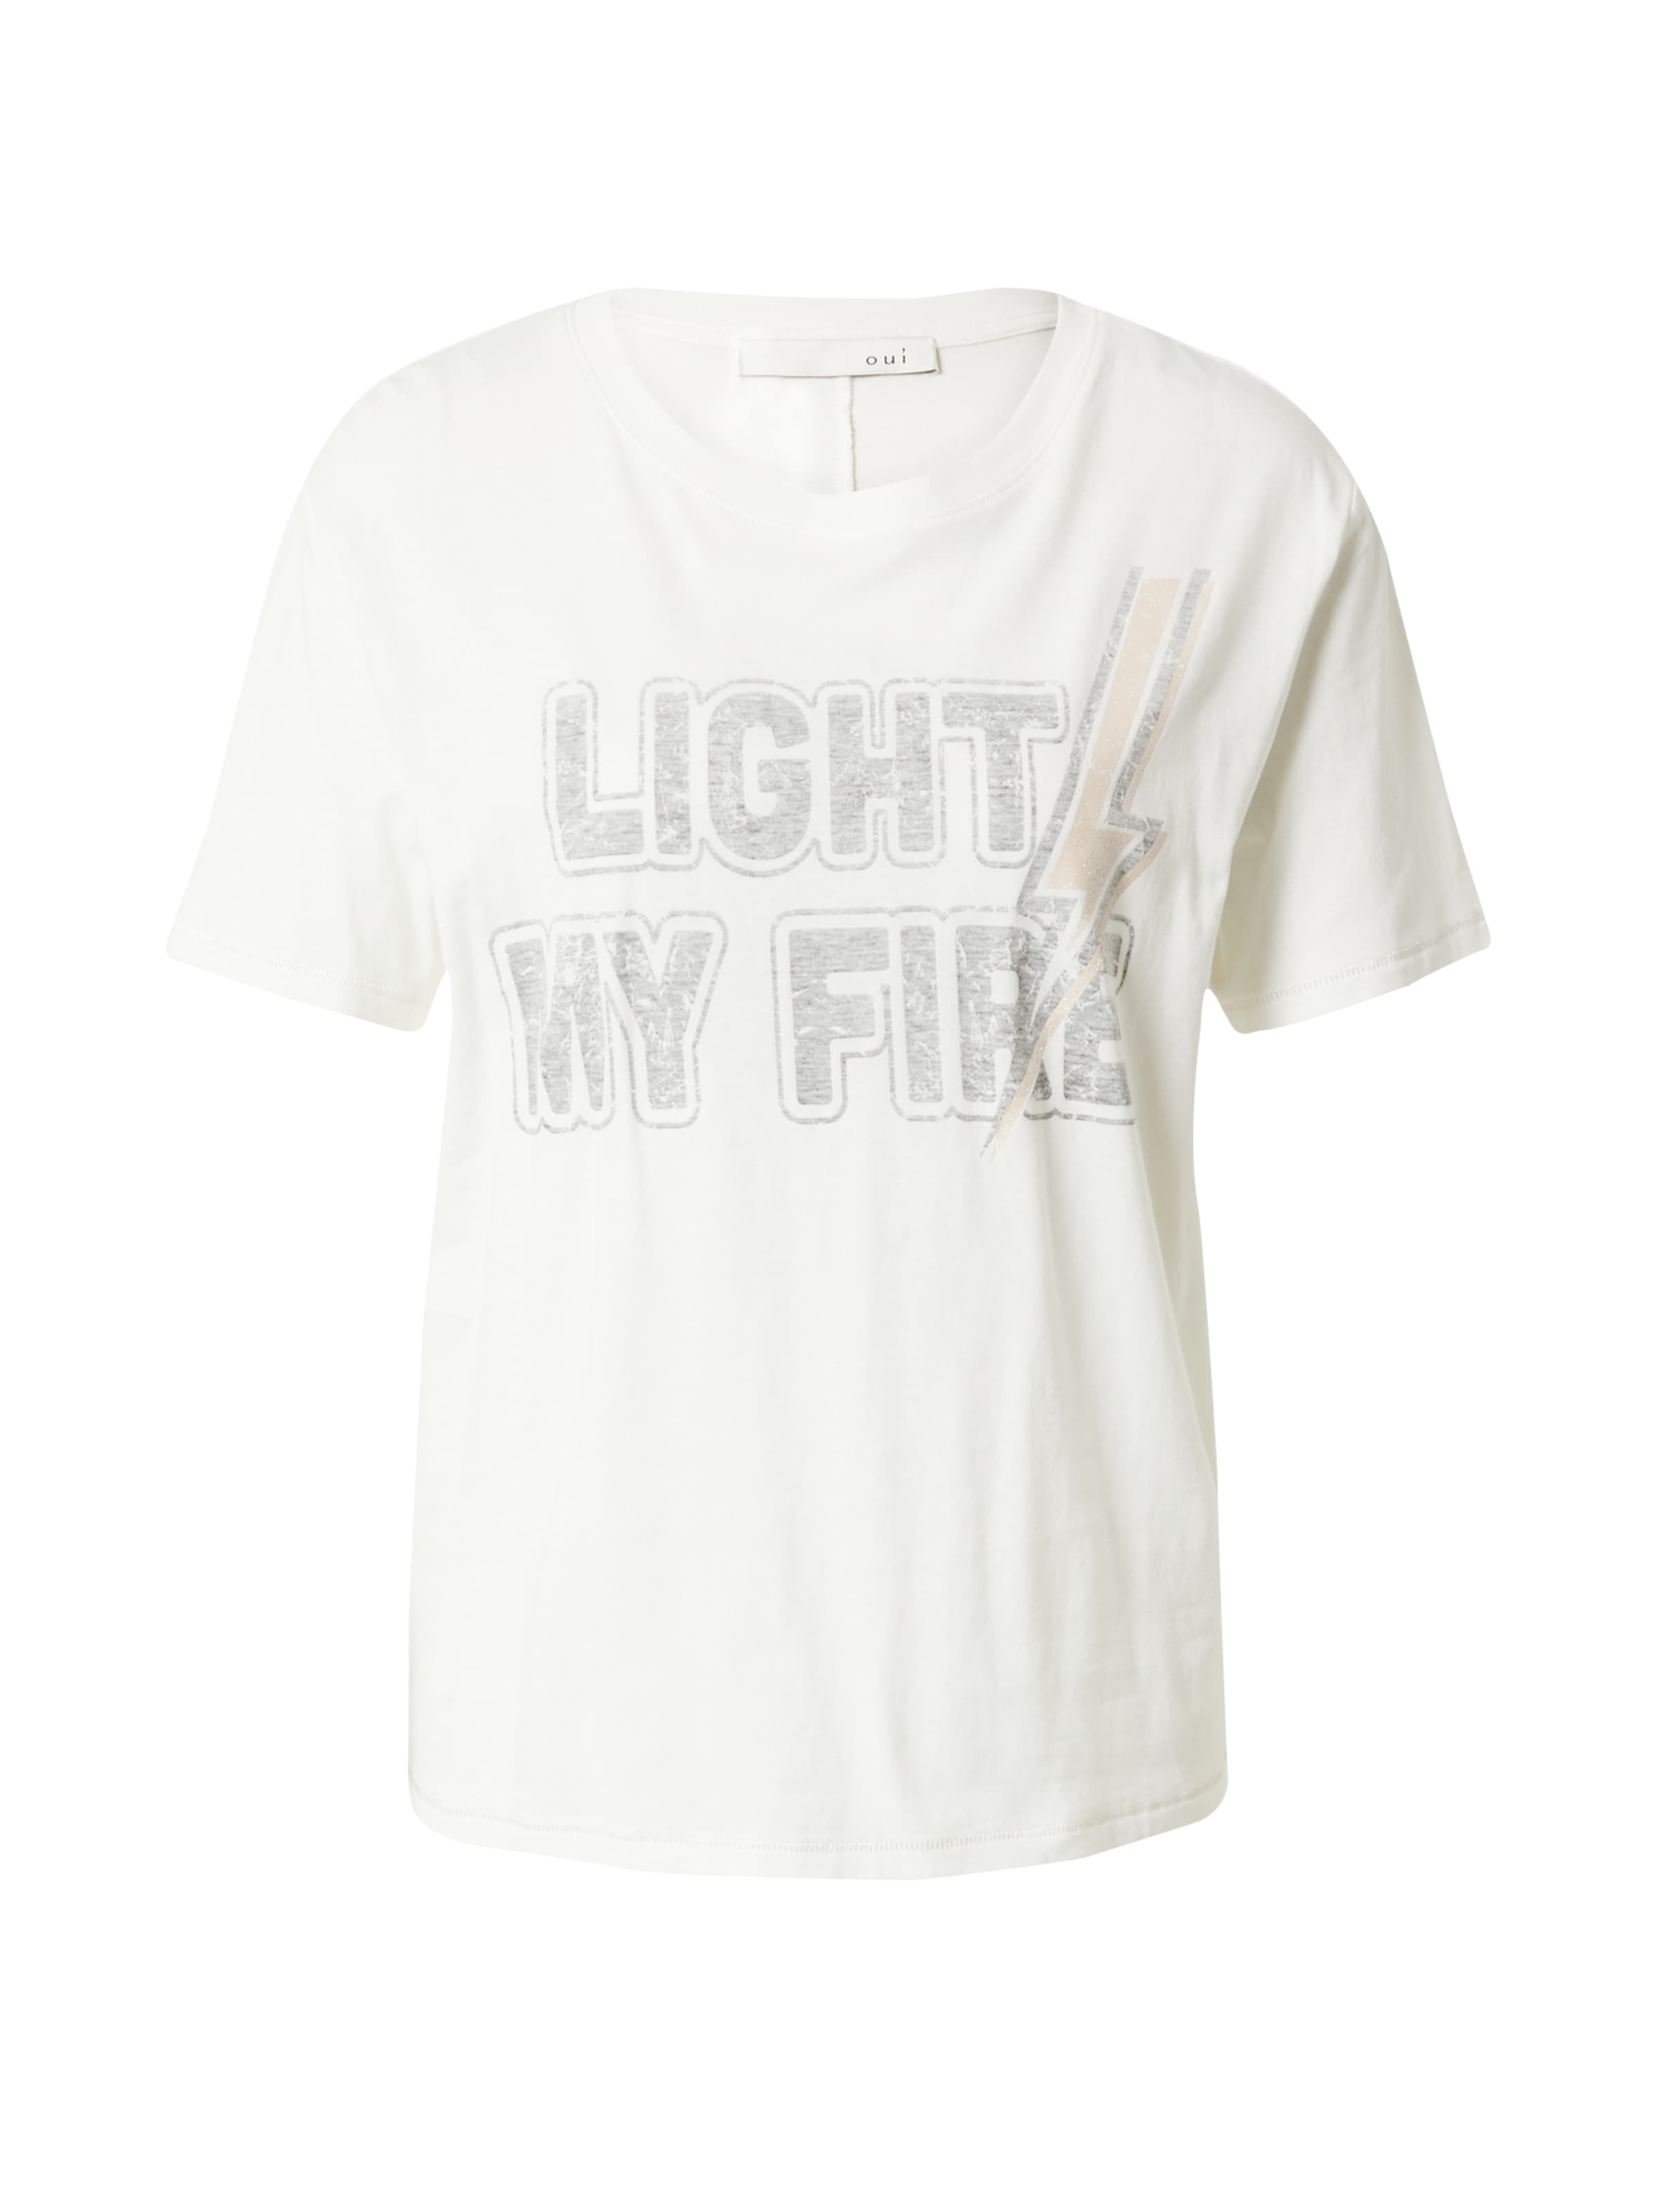 Frauen Shirts & Tops OUI T-Shirt in Weiß - YR86106